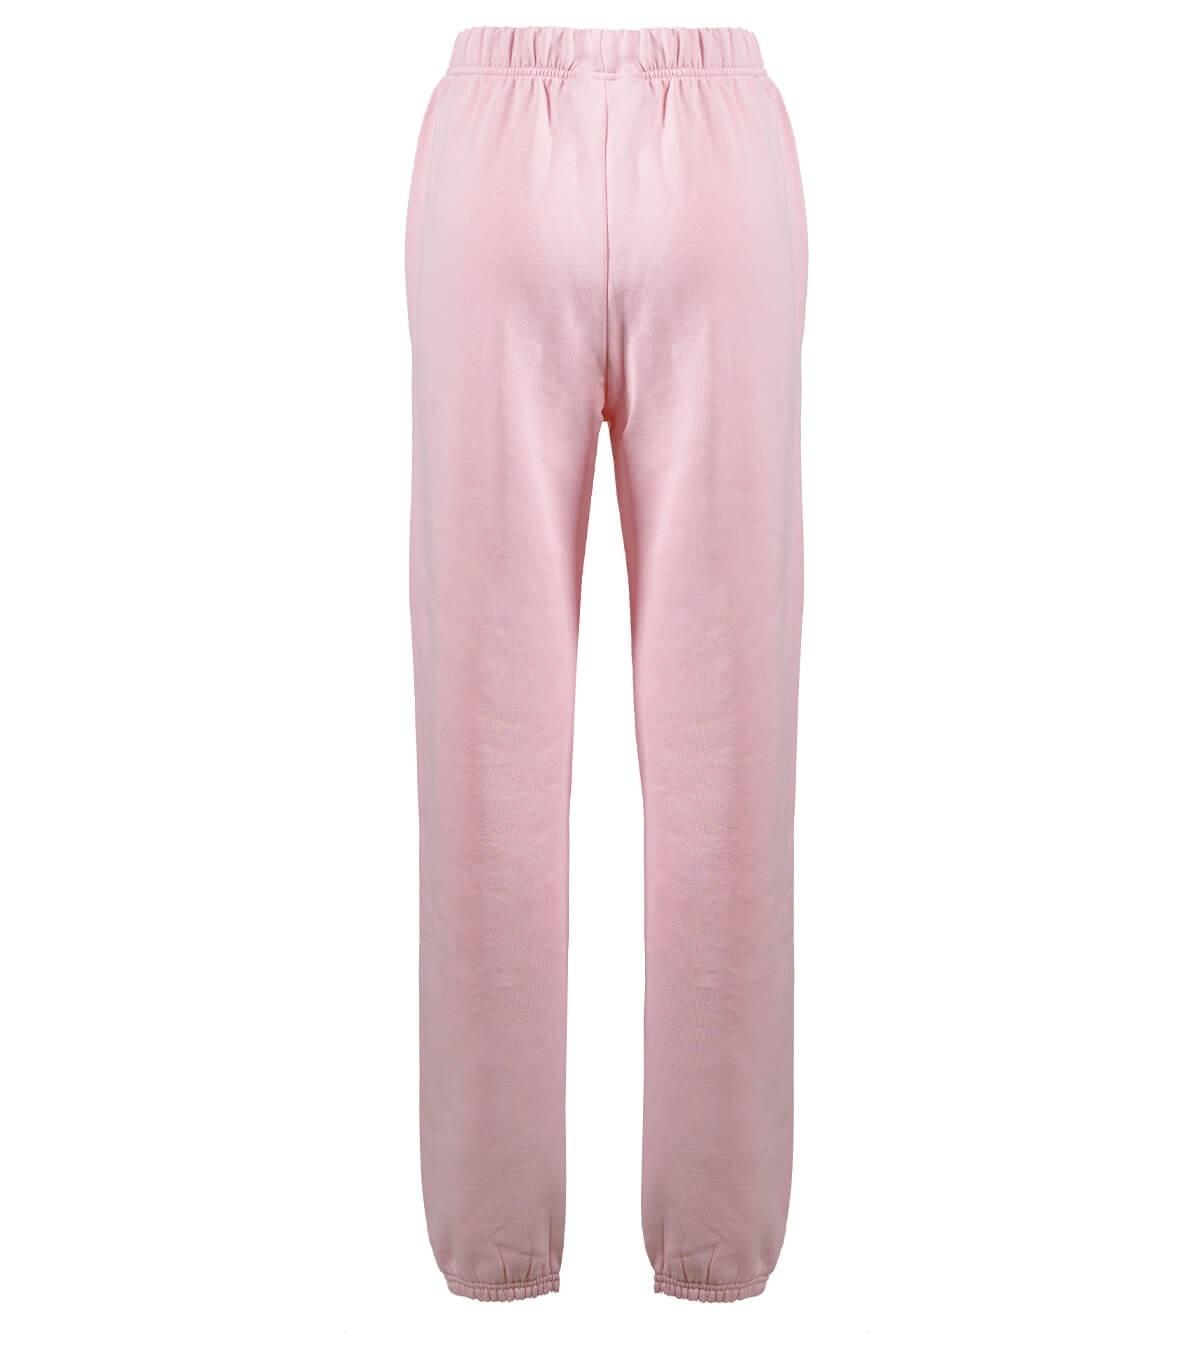 Chiara Ferragni Logo Basic Sweatpants in Pink - Save 55% - Lyst